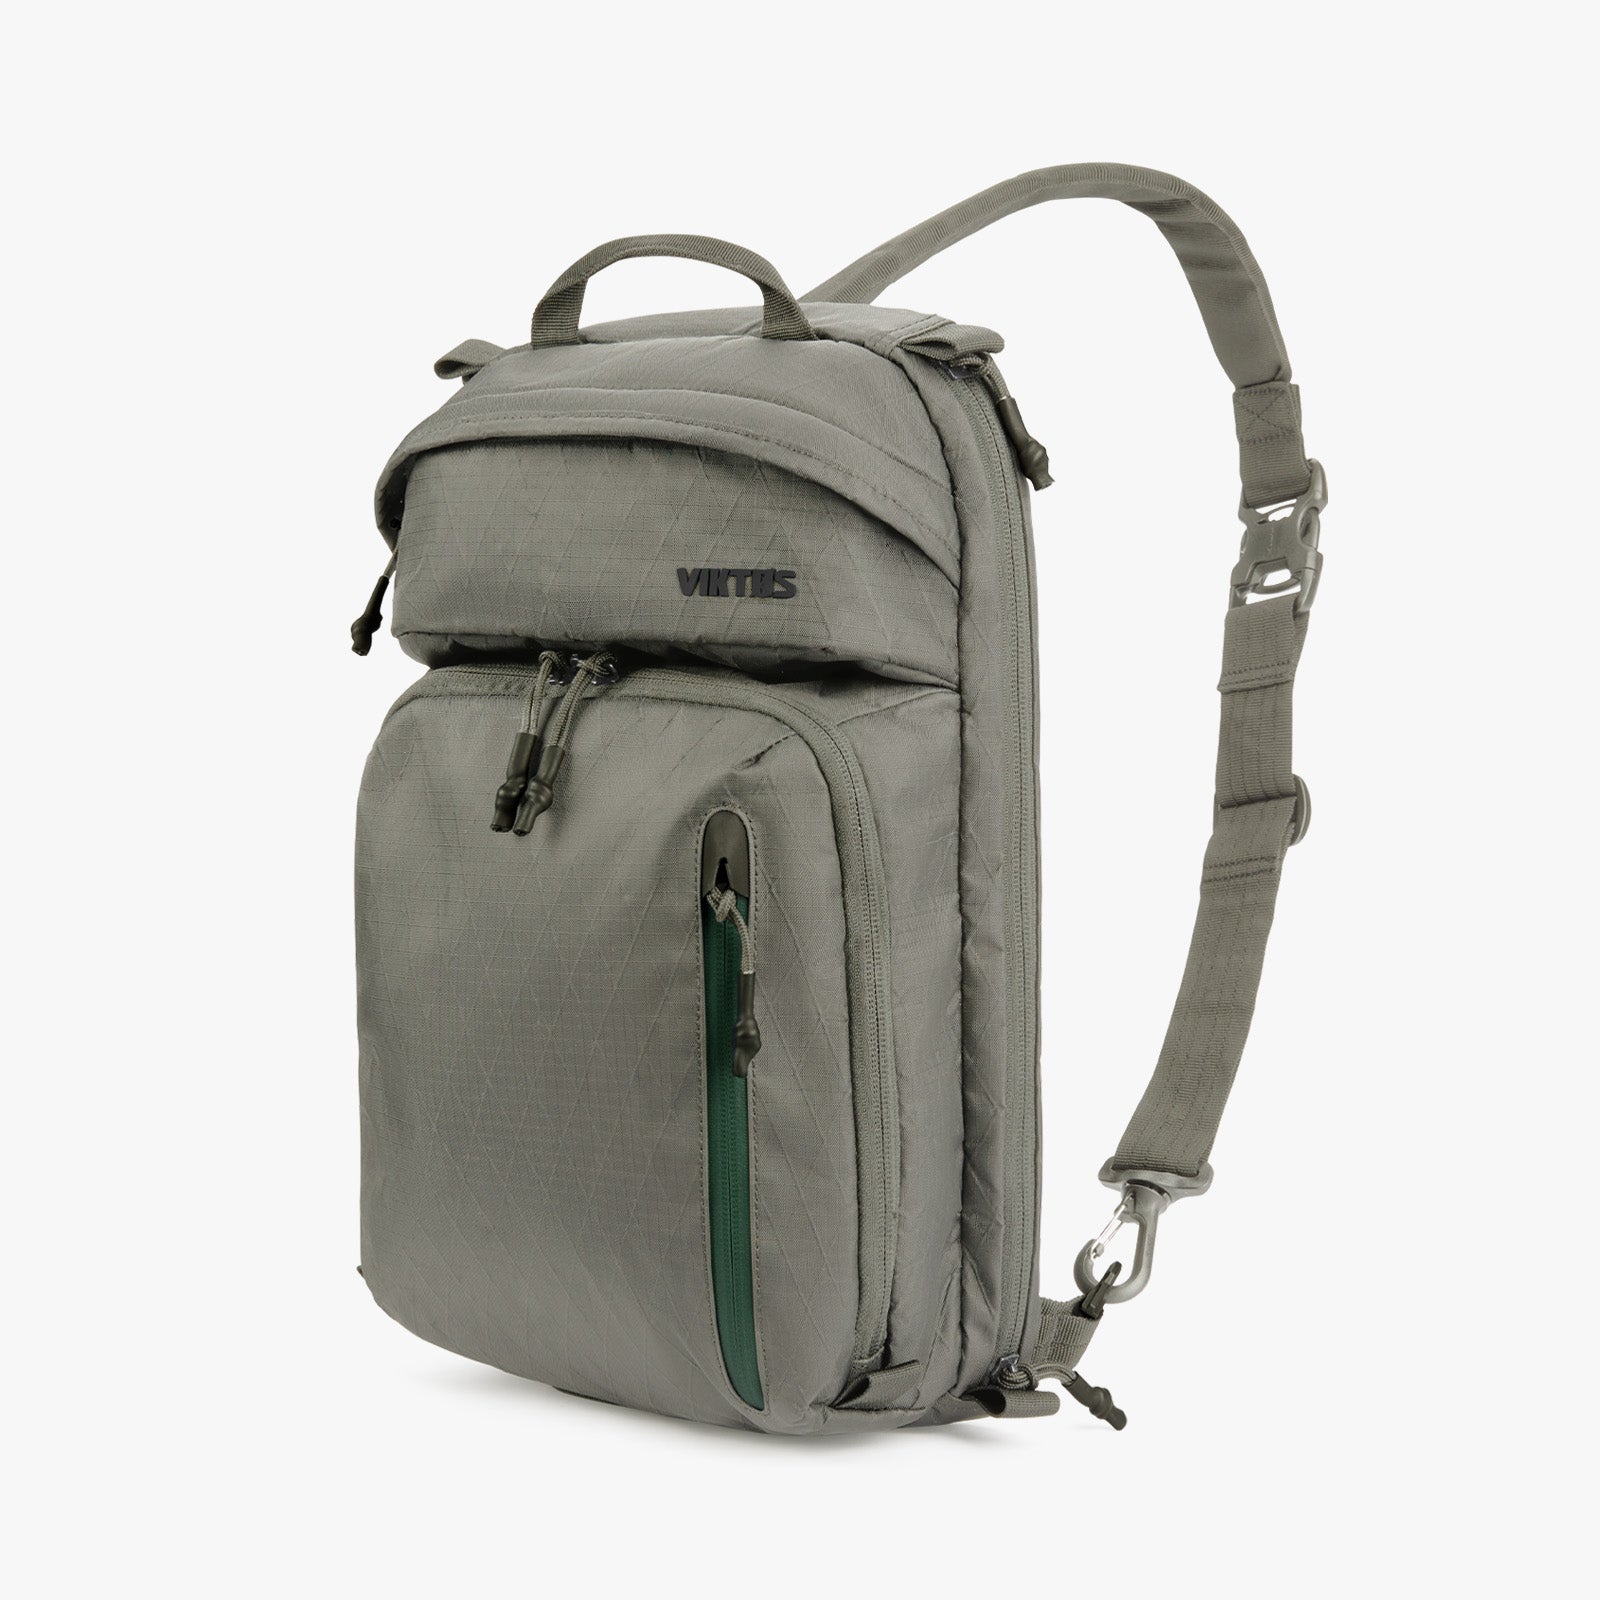 VIKTOS Upscale XL Slingbag Bags, Packs and Cases VIKTOS Greyman Tactical Gear Supplier Tactical Distributors Australia